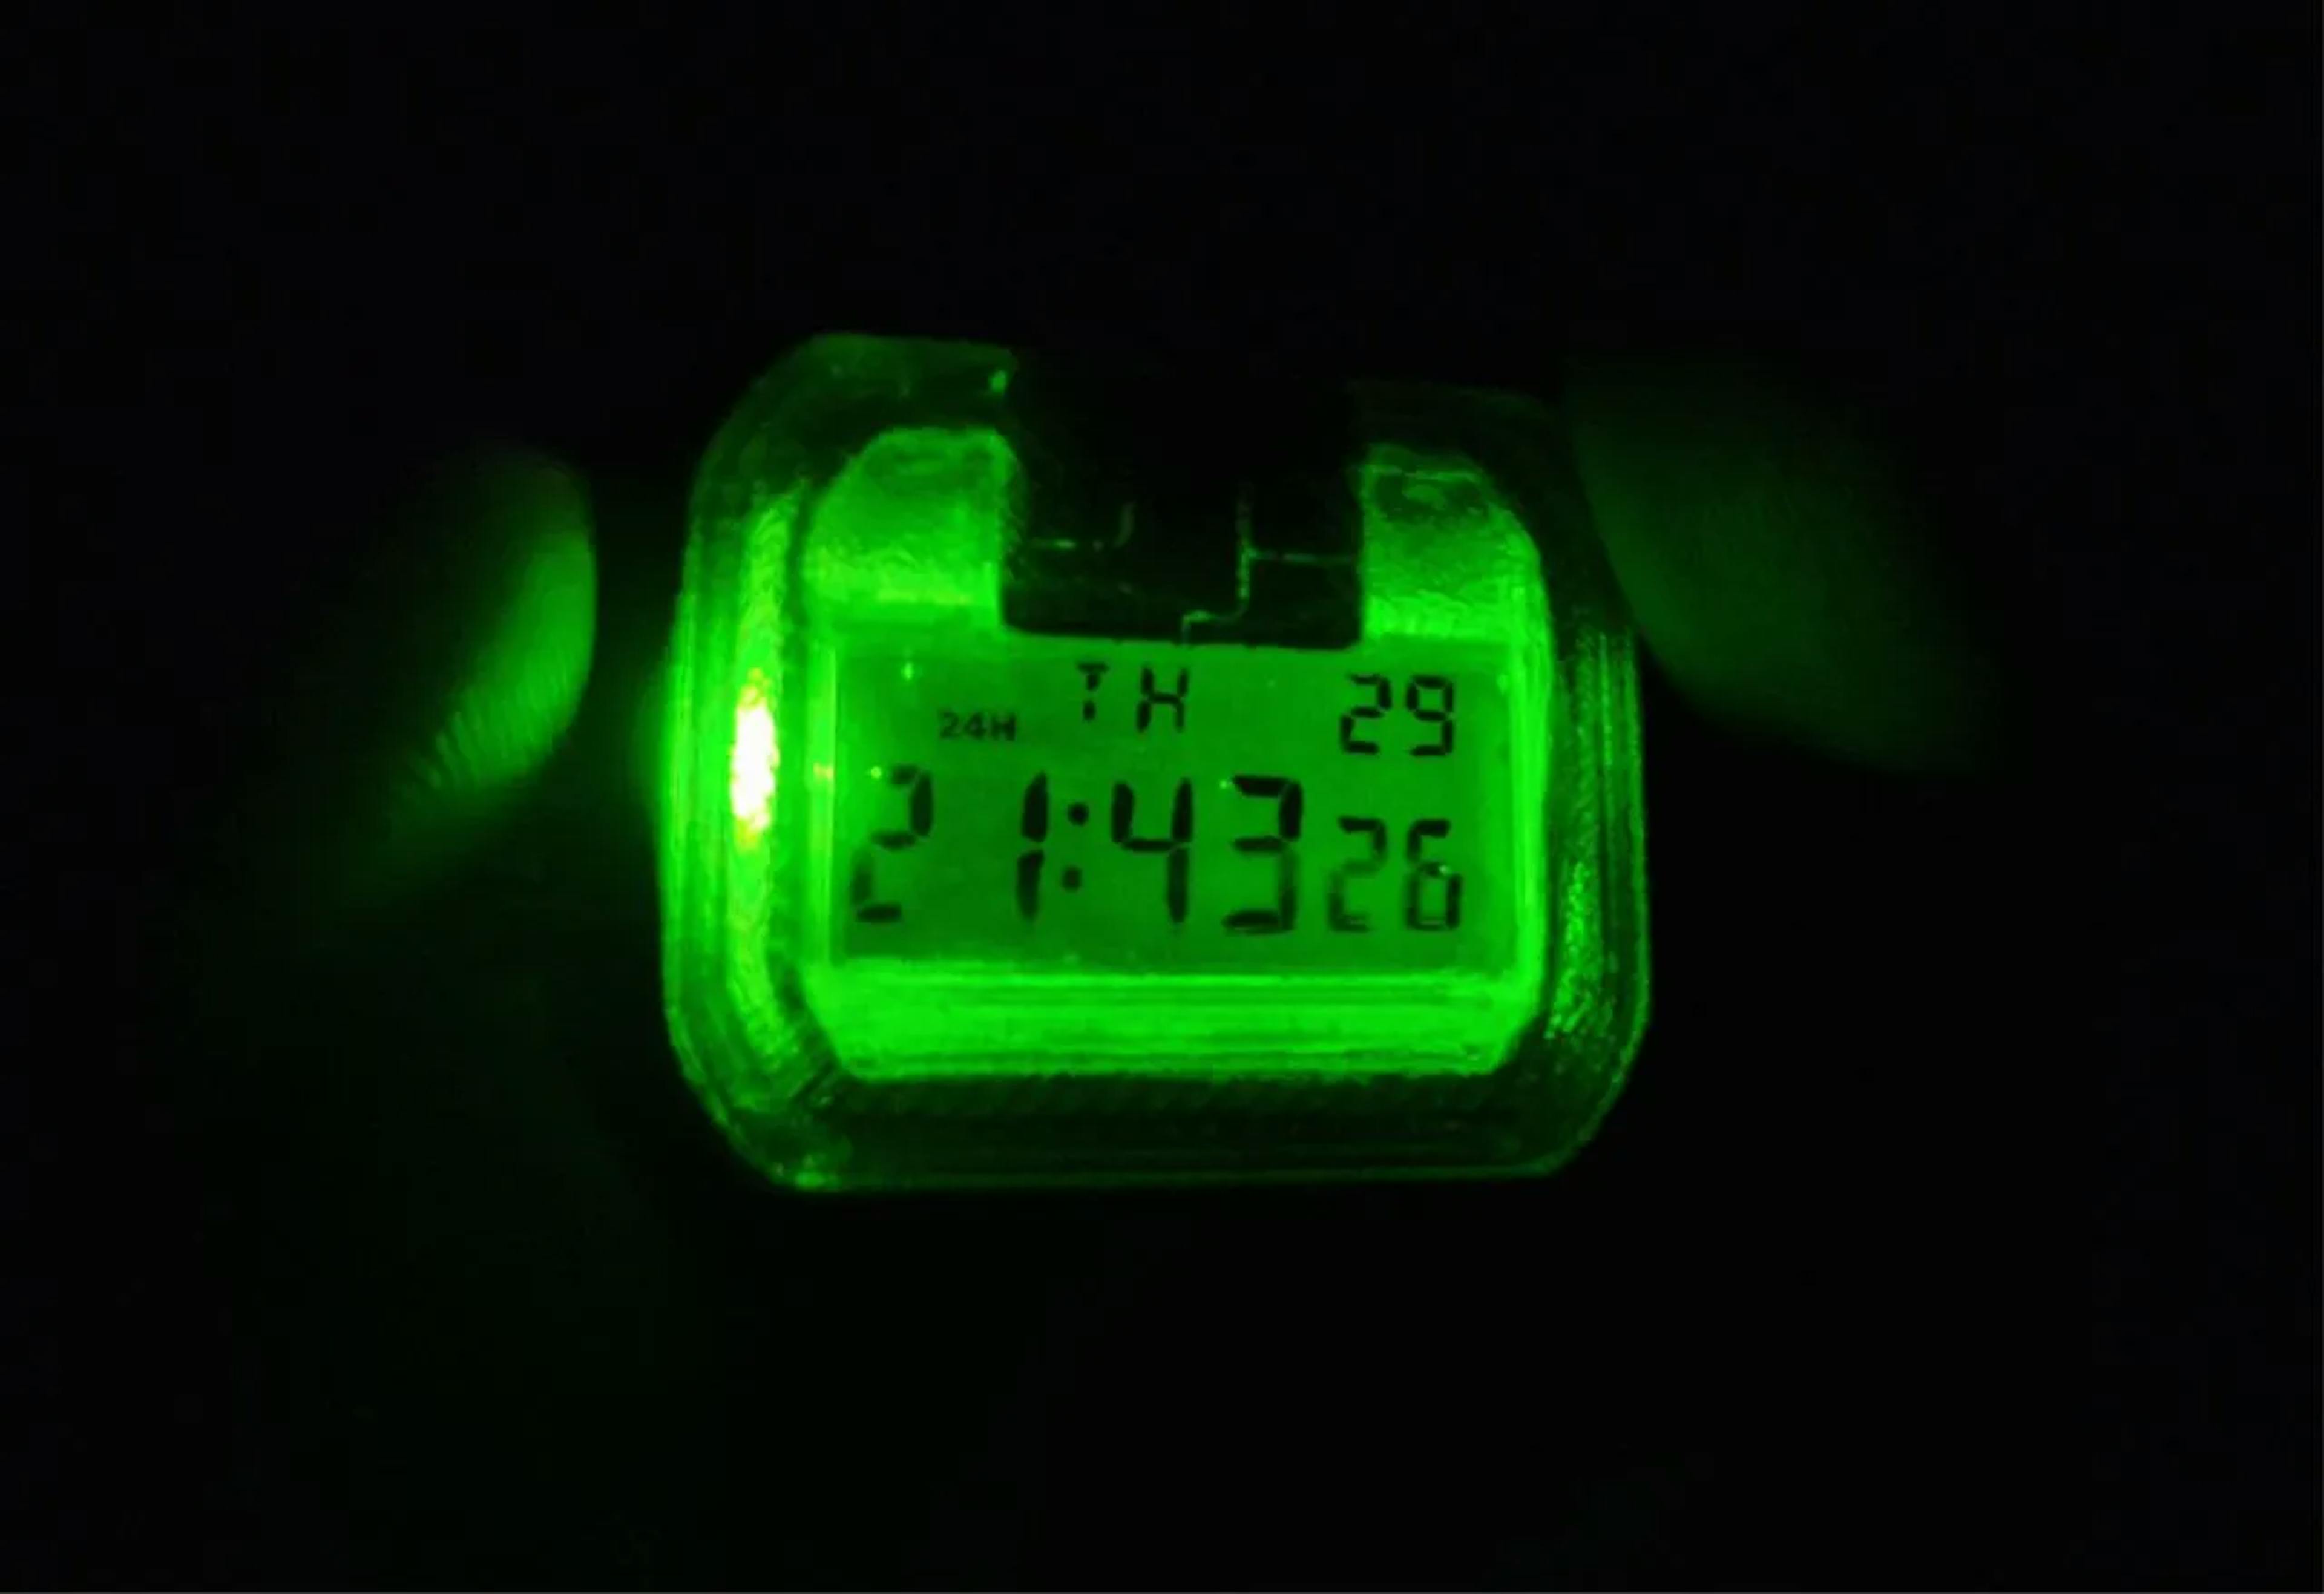 Night view of the CASIO F-91W digital watch — kryptonite-green led backlight